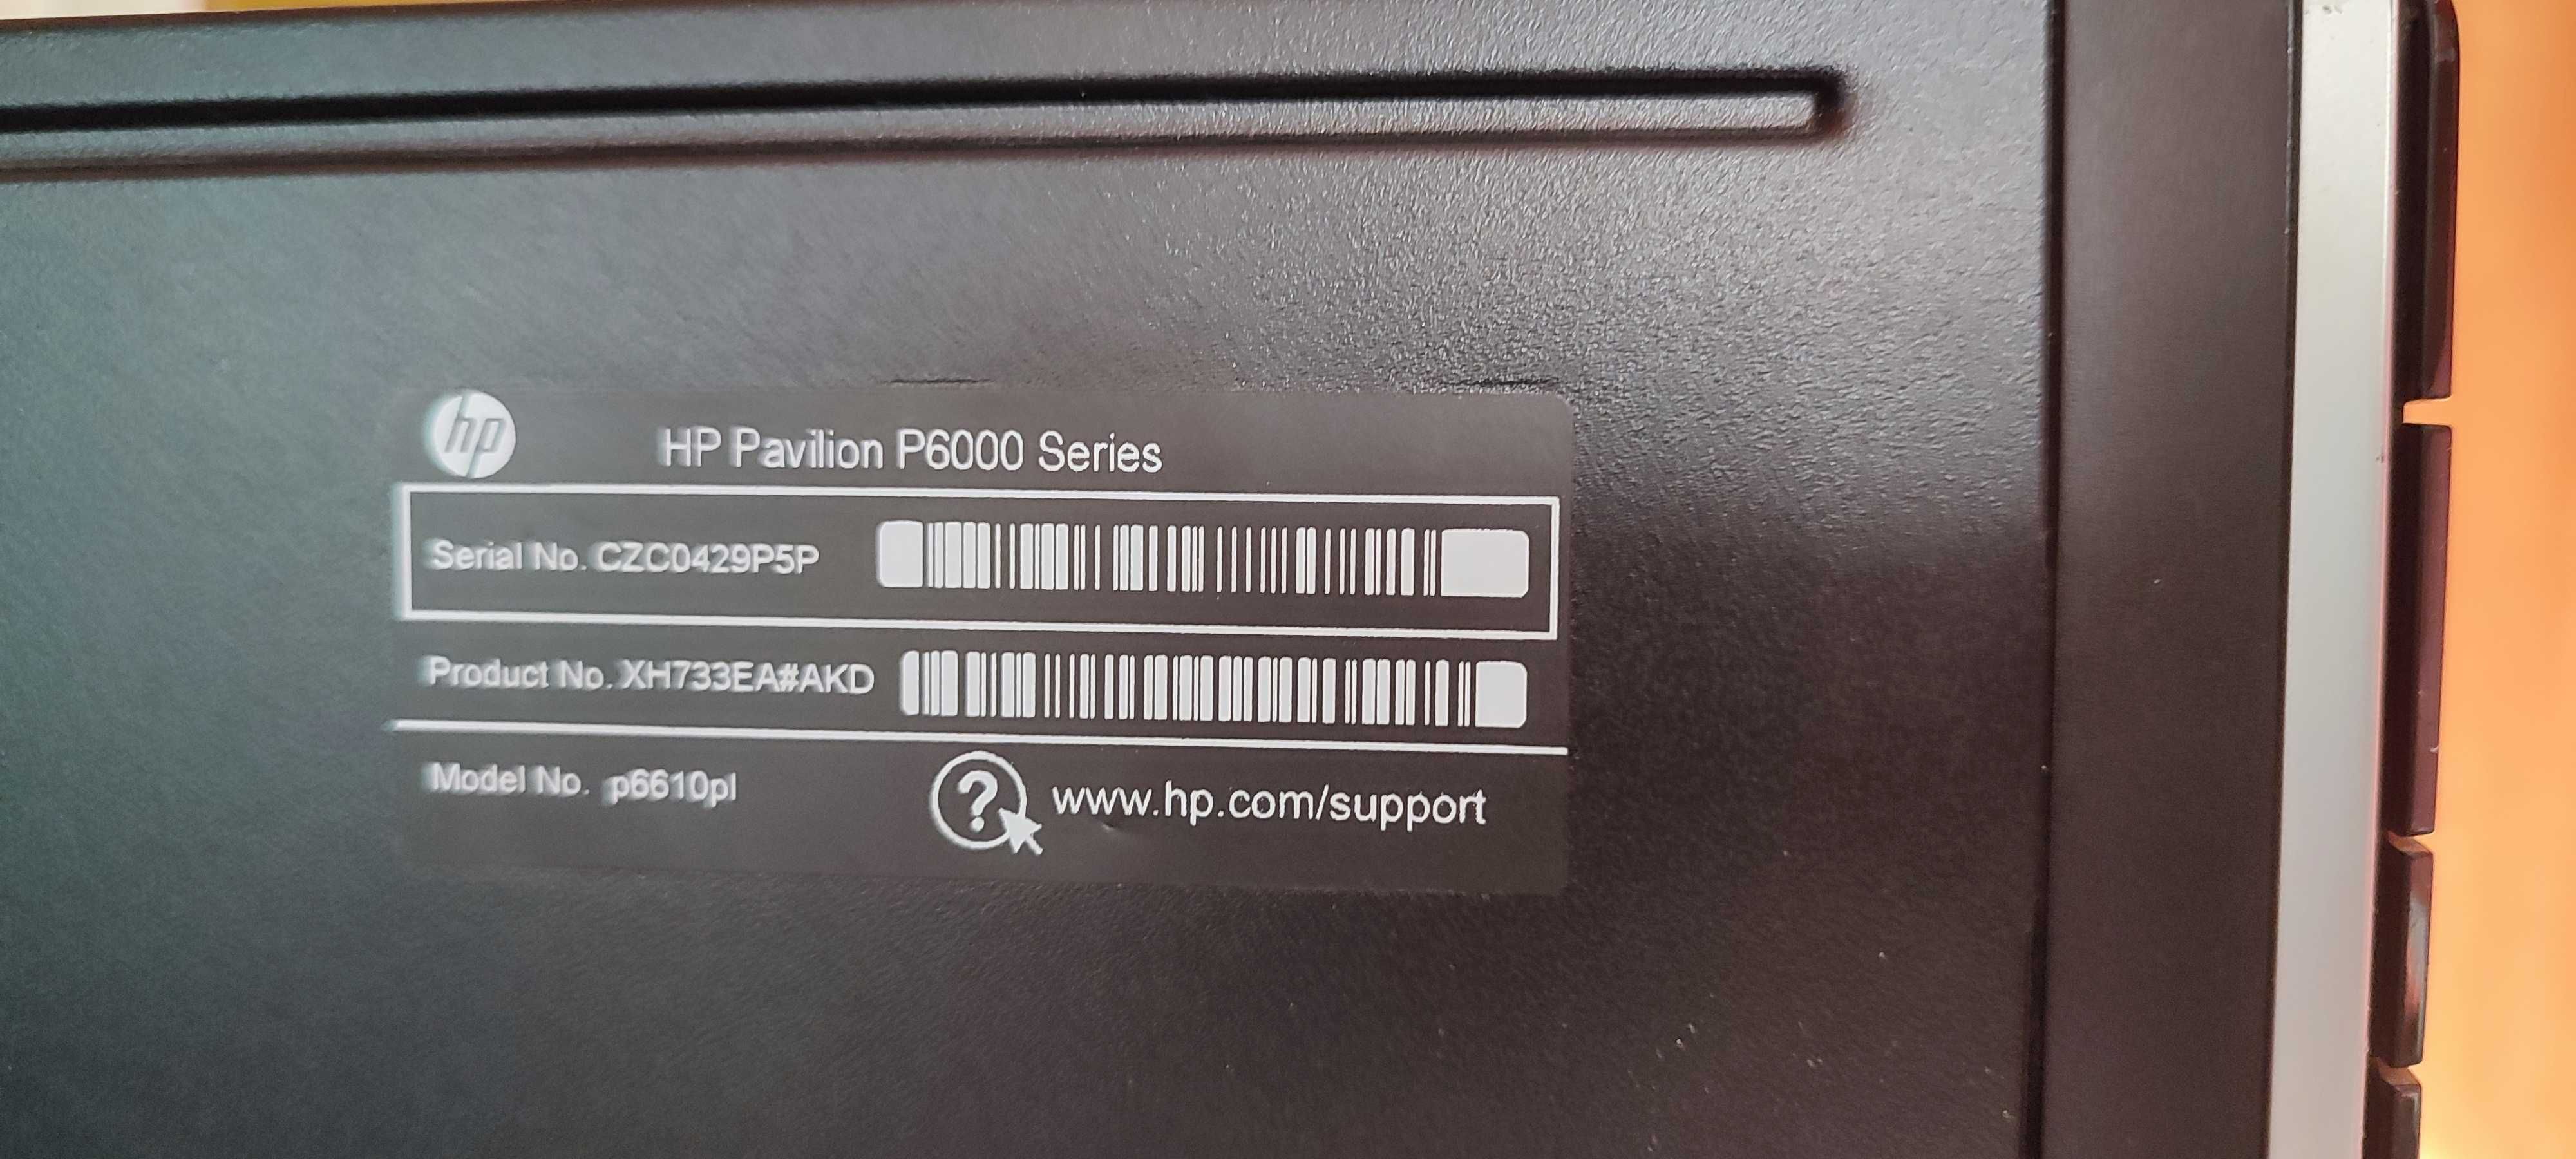 Komputer stacjonarny HP Pavilion P6000 plus klawiatura MSI